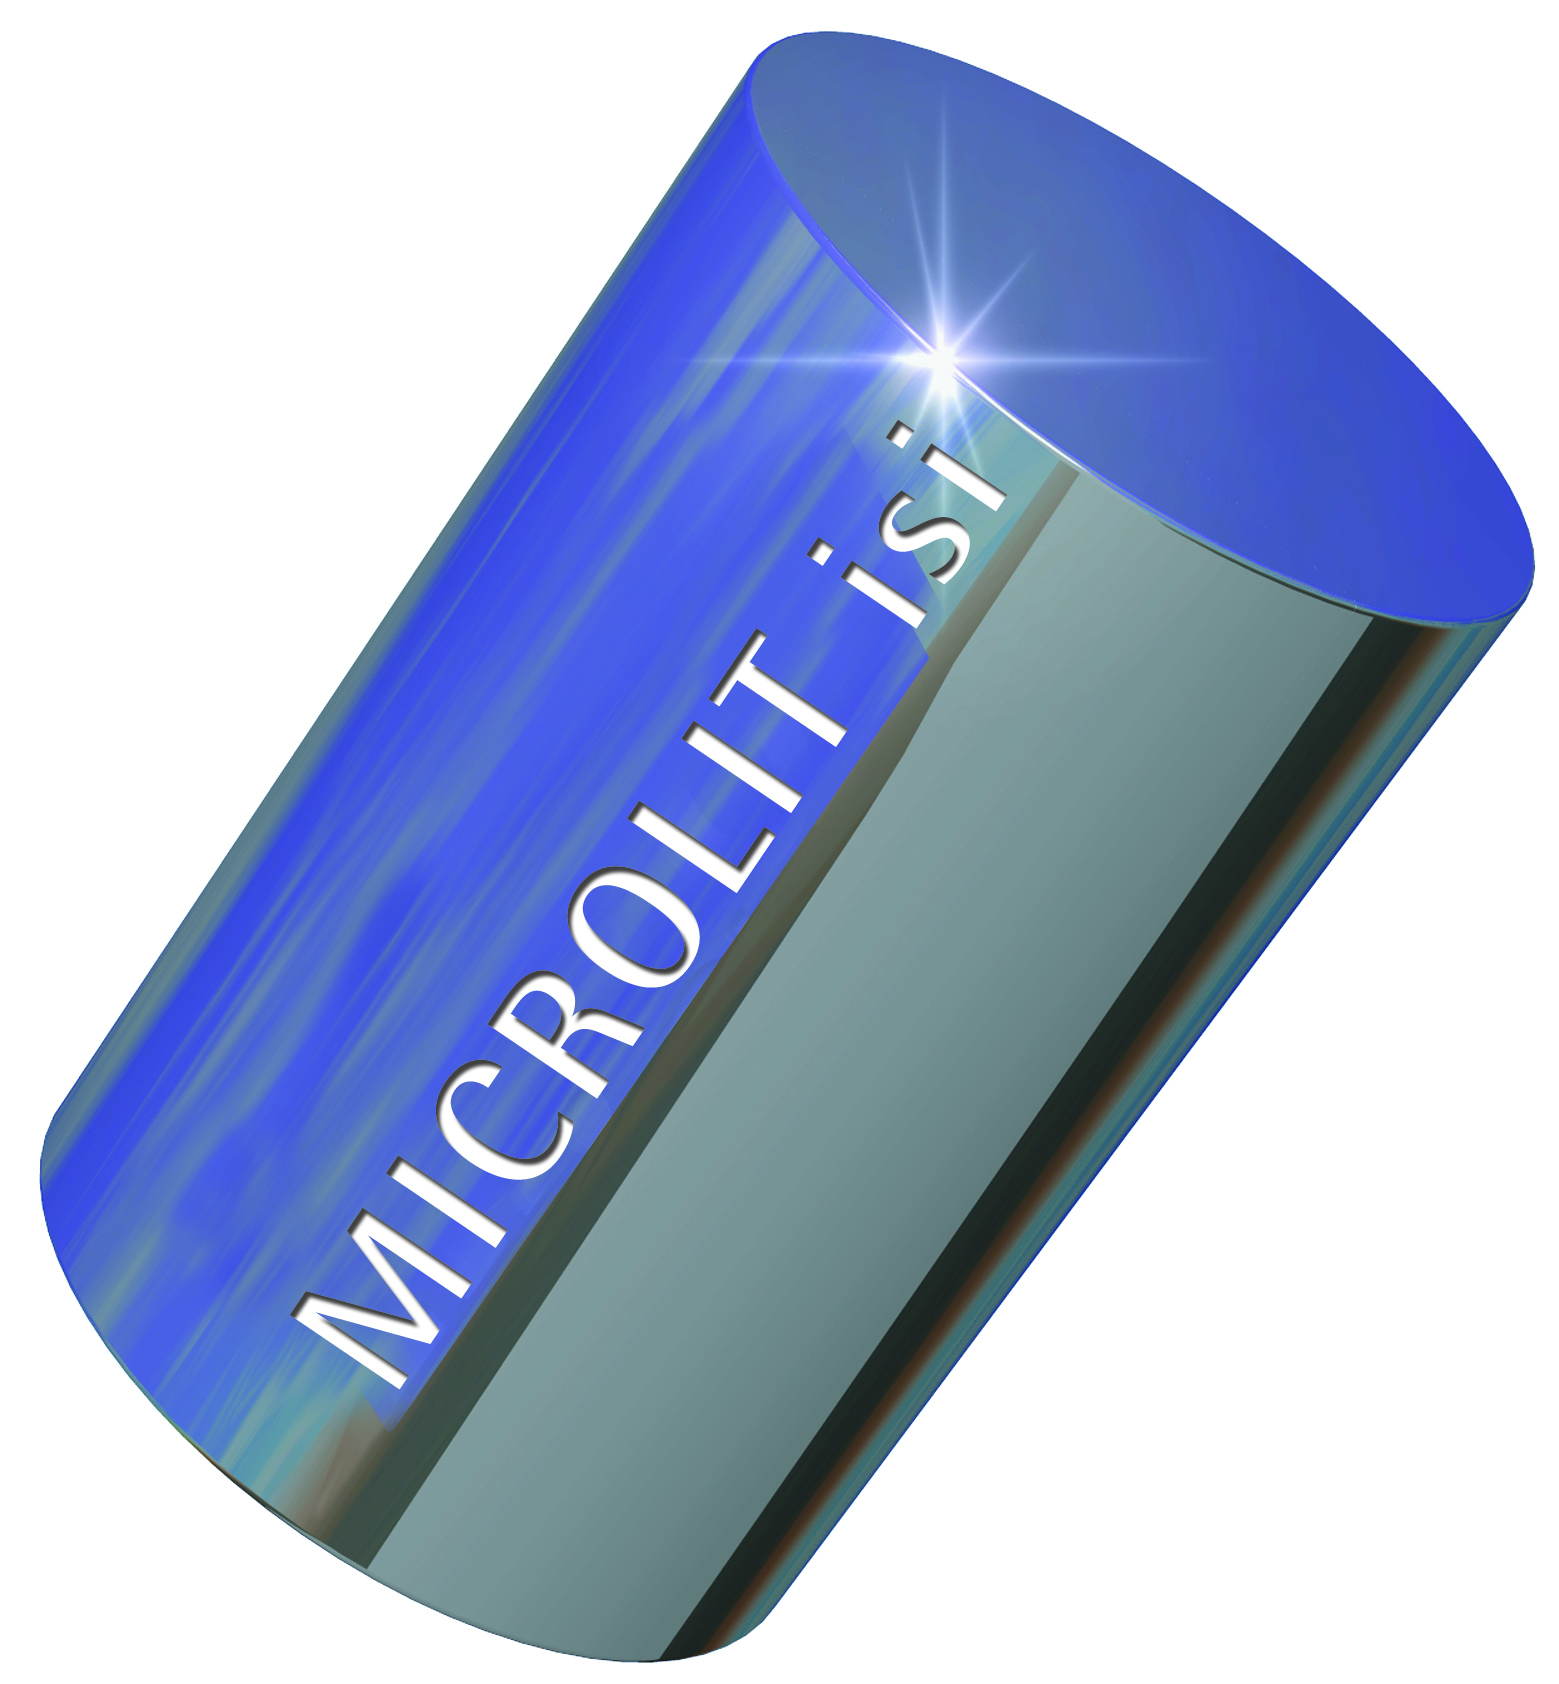 Microlit Isi, 1Kg, CoCr ceramic alloy